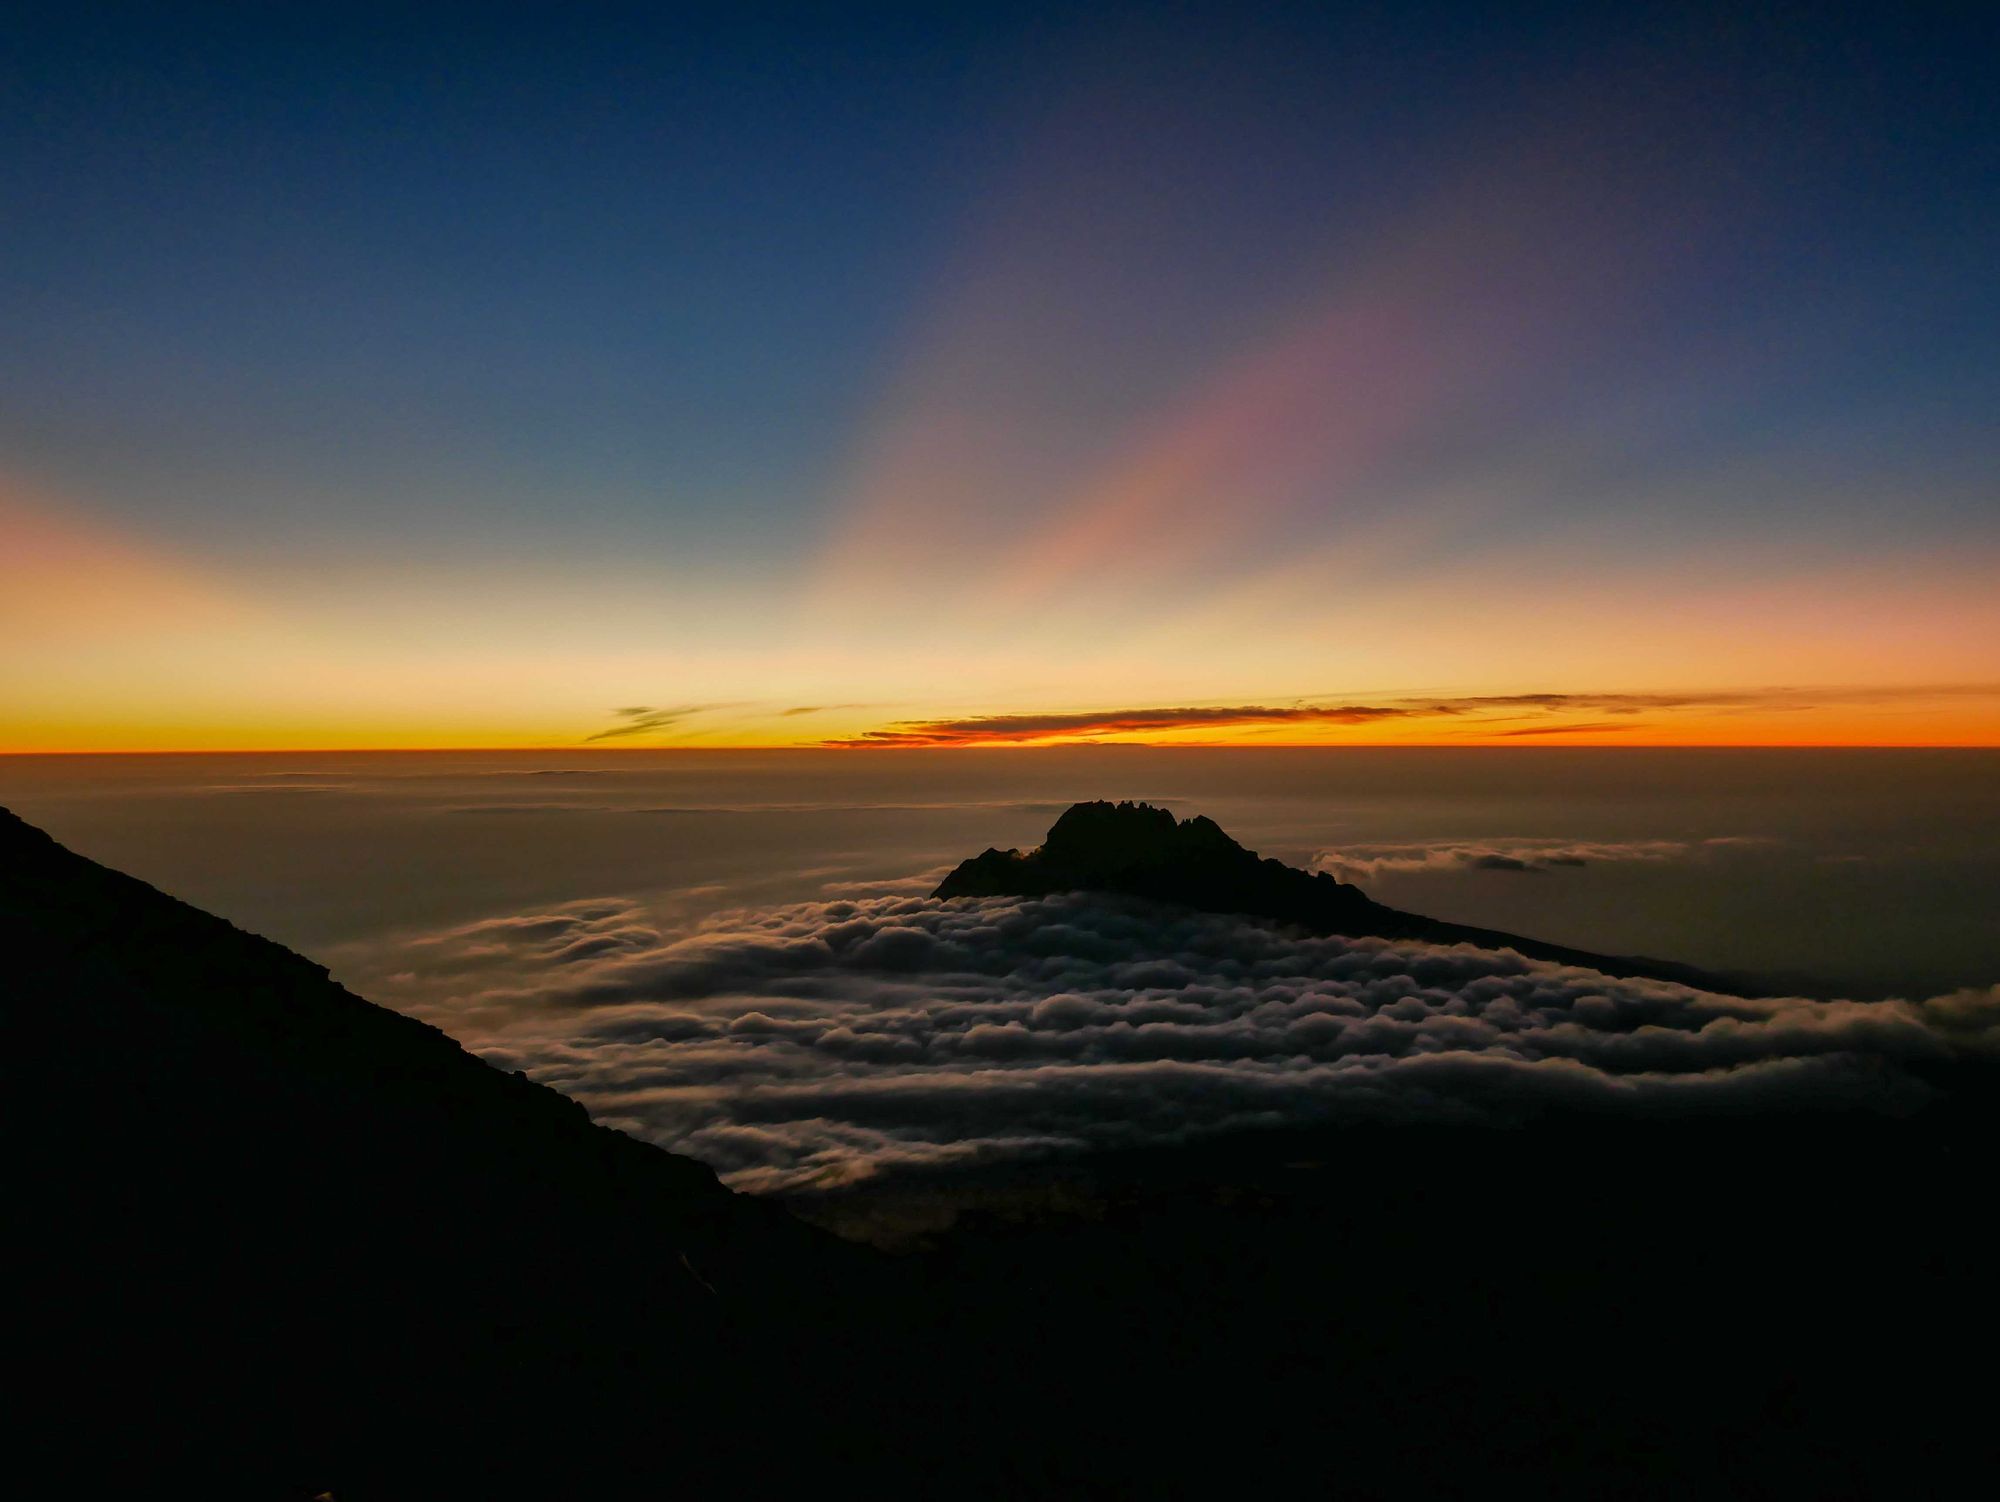 Rays of light emerging from the horizon, illumination Kilimanjaro's Mawenzi Peak, circled by cloud.